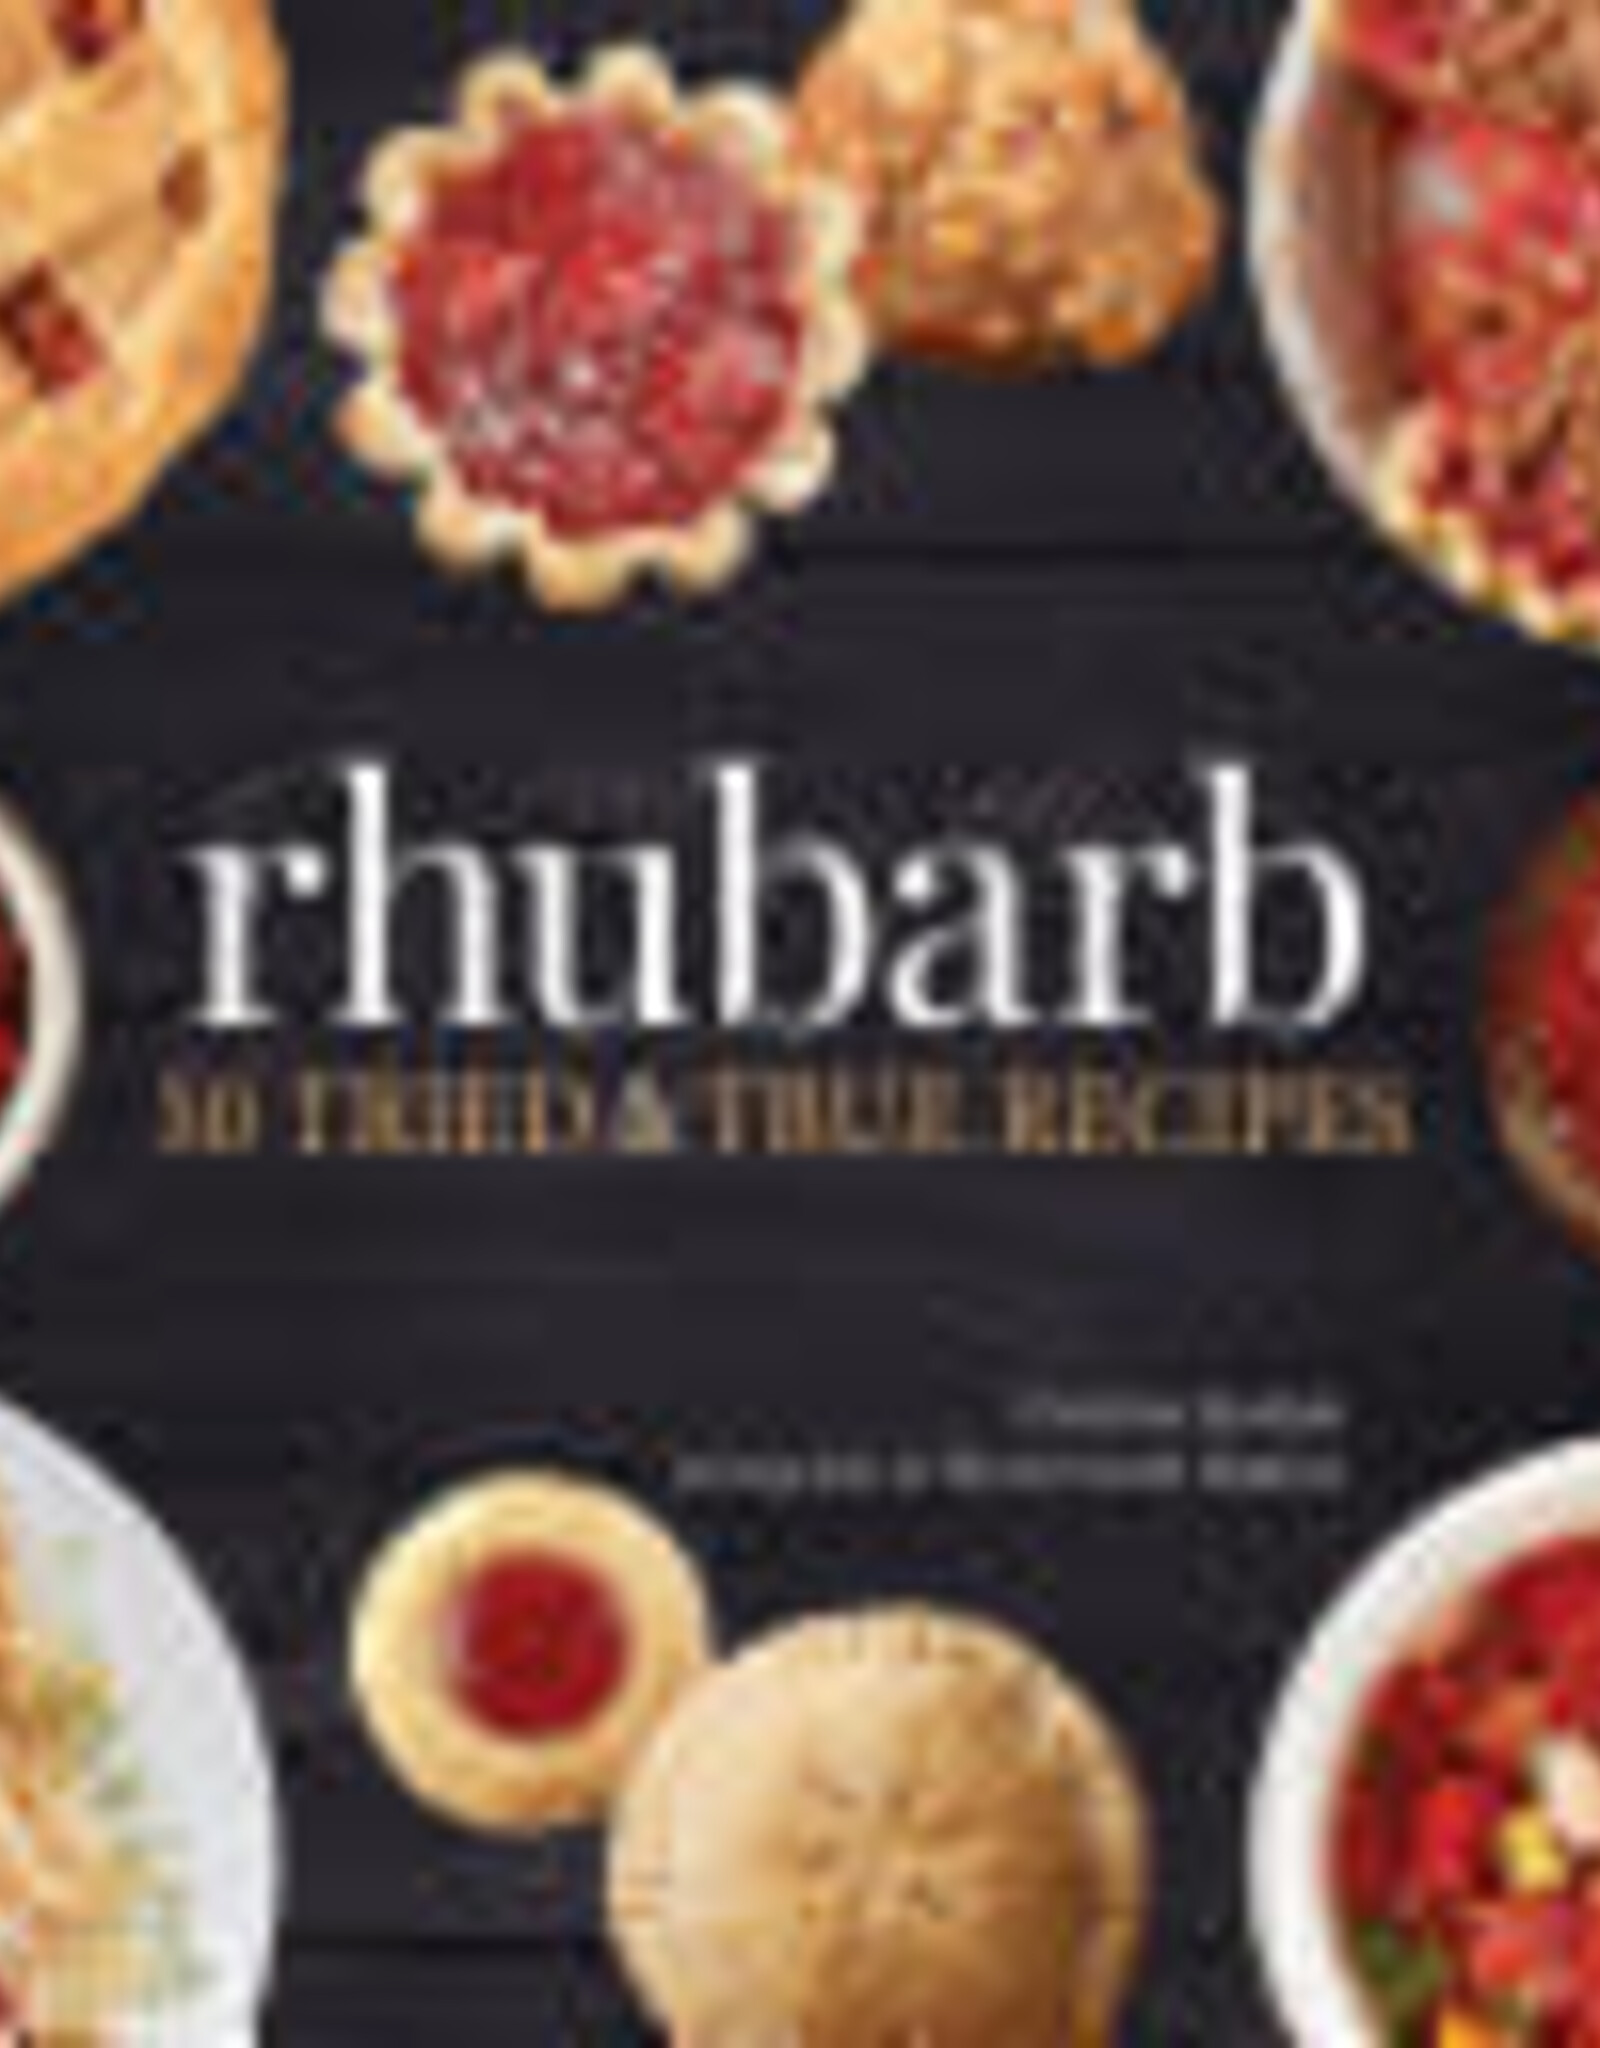 Rhubarb: 50 Tried and True Recipes